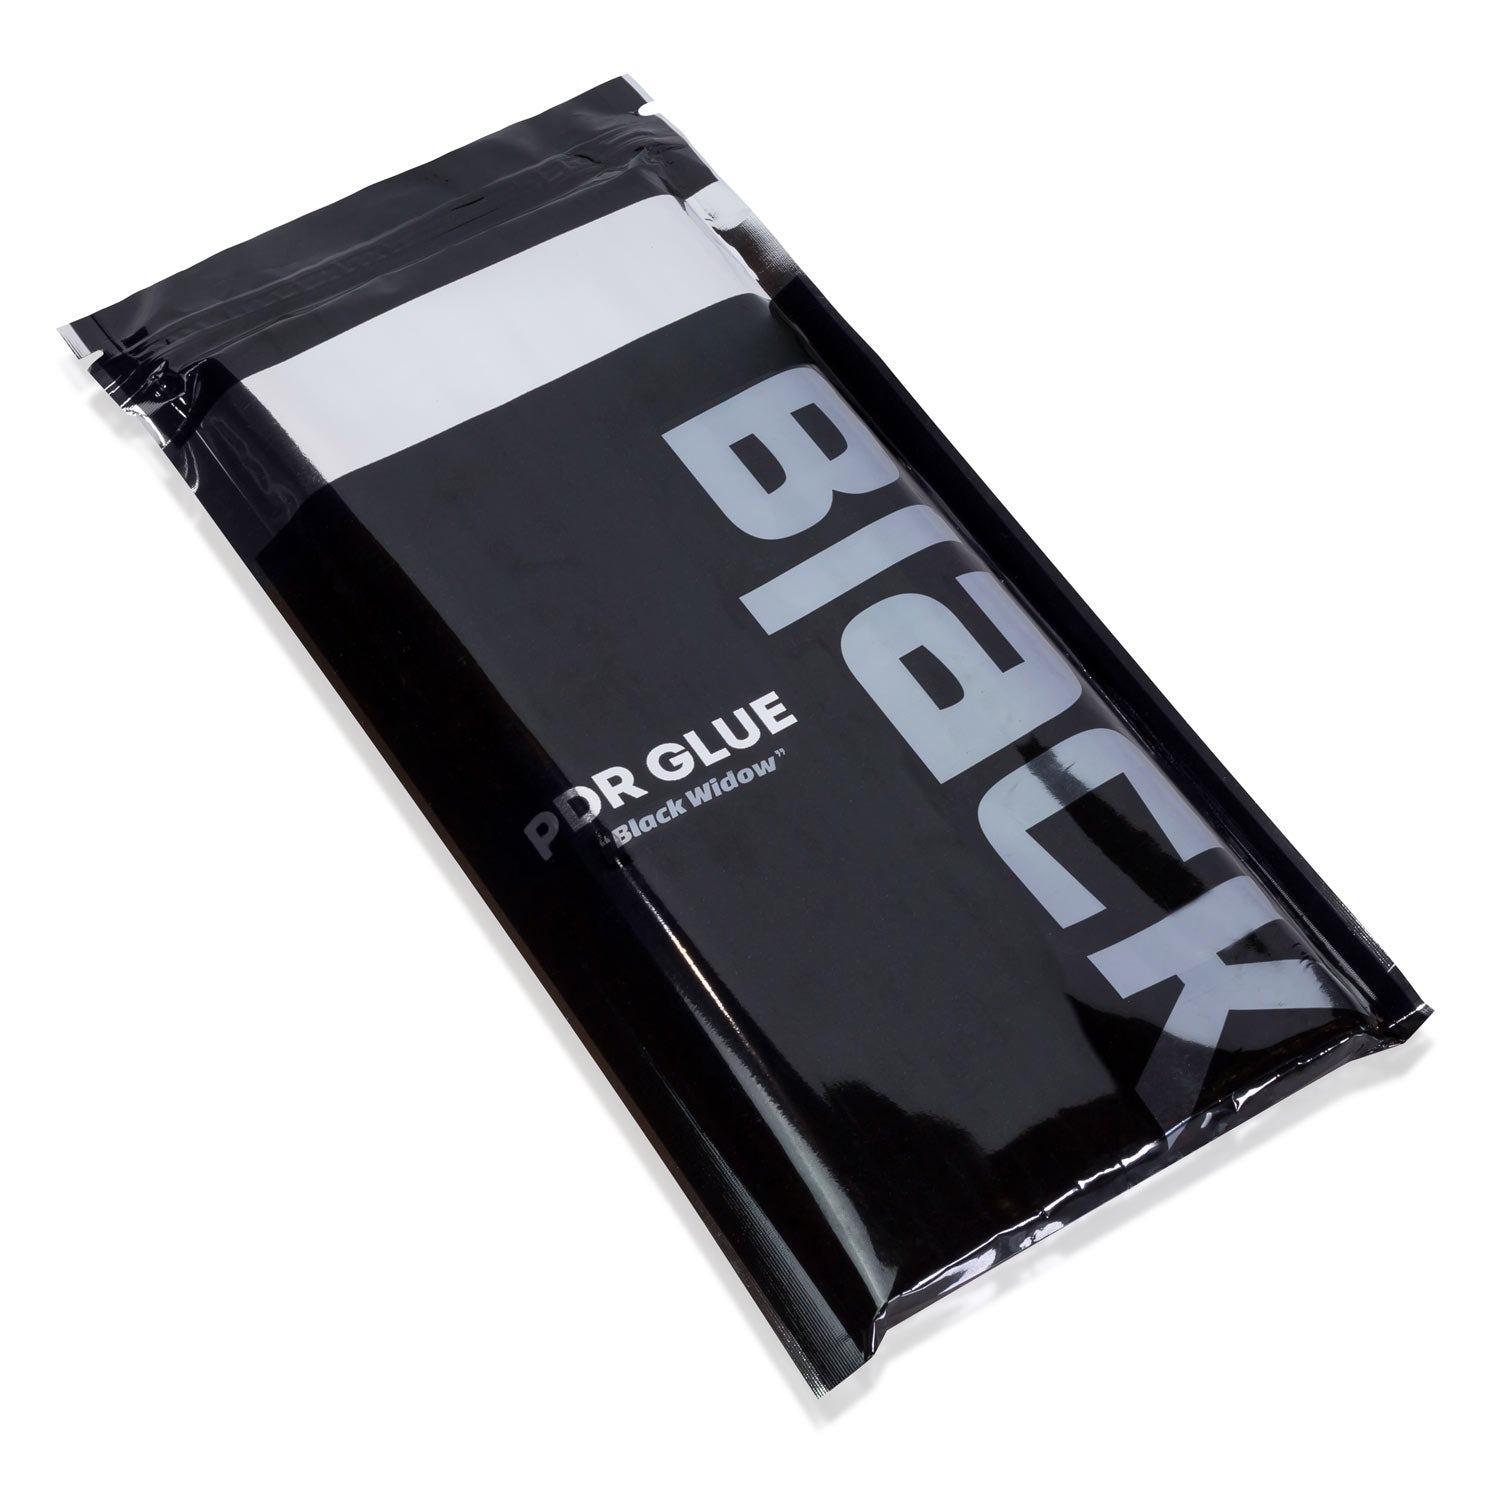 Burro PDR Glue Sticks - Black Widow – LAKA tools USA